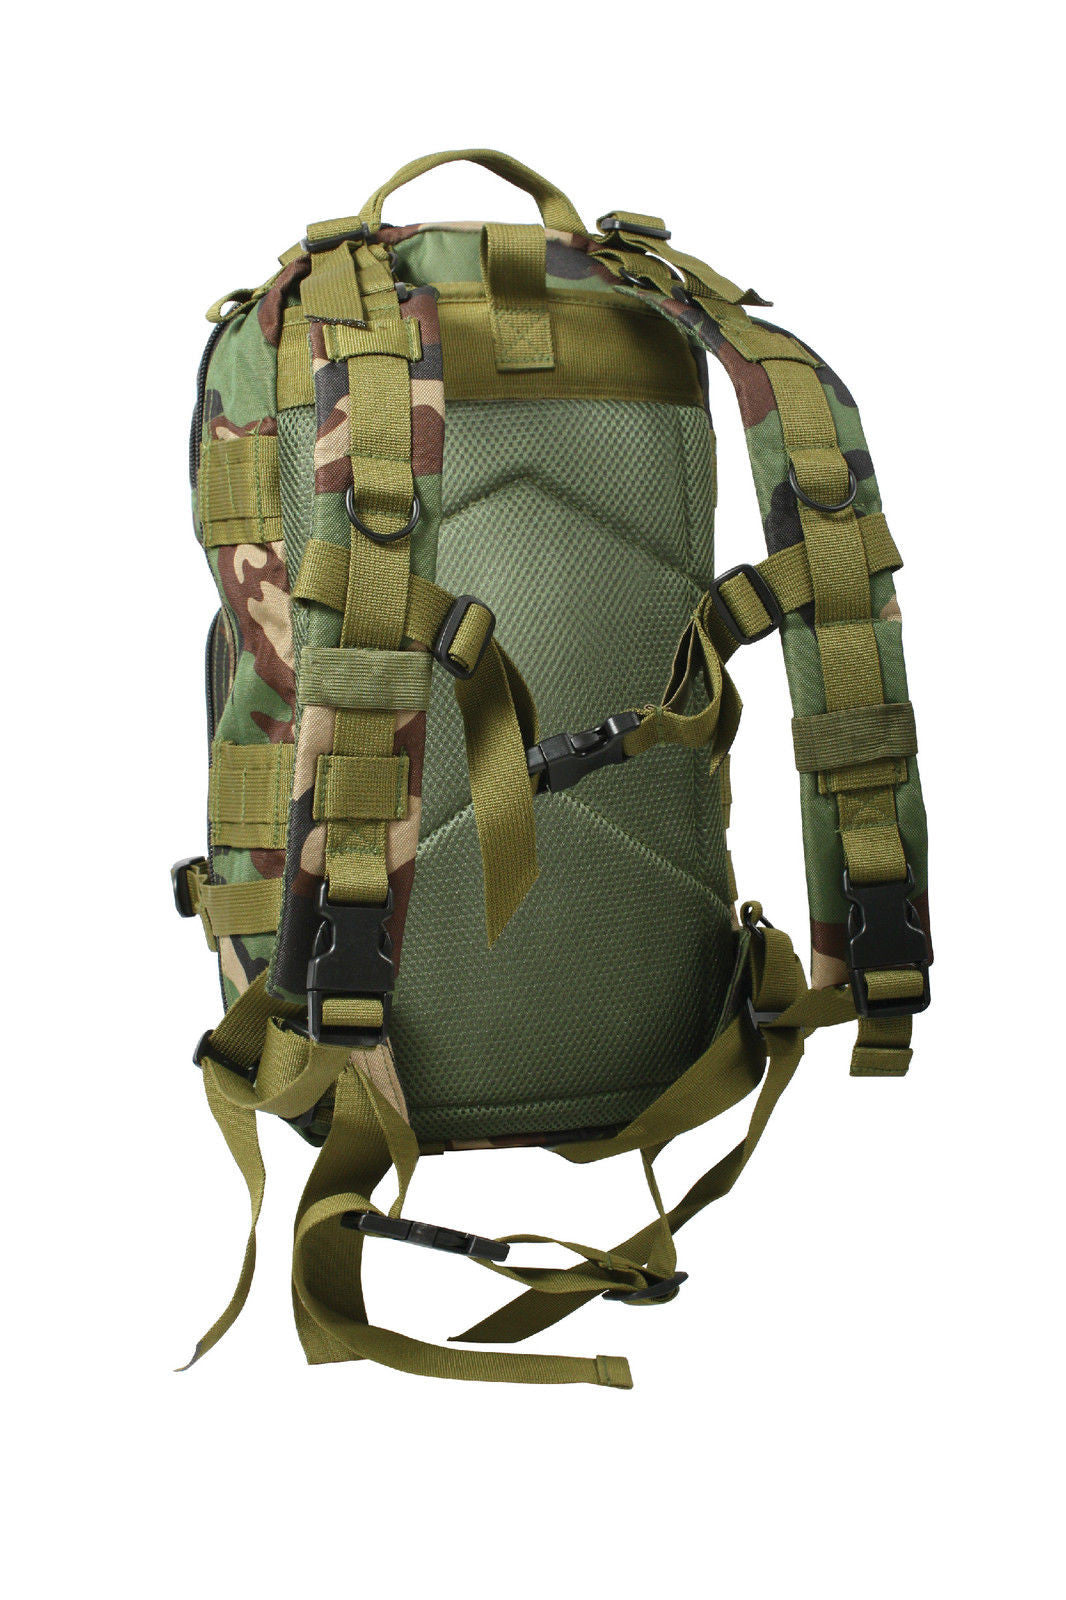 Woodland Camo Medium Transport Pack Bag Camouflage MOLLE Hiking Backpack